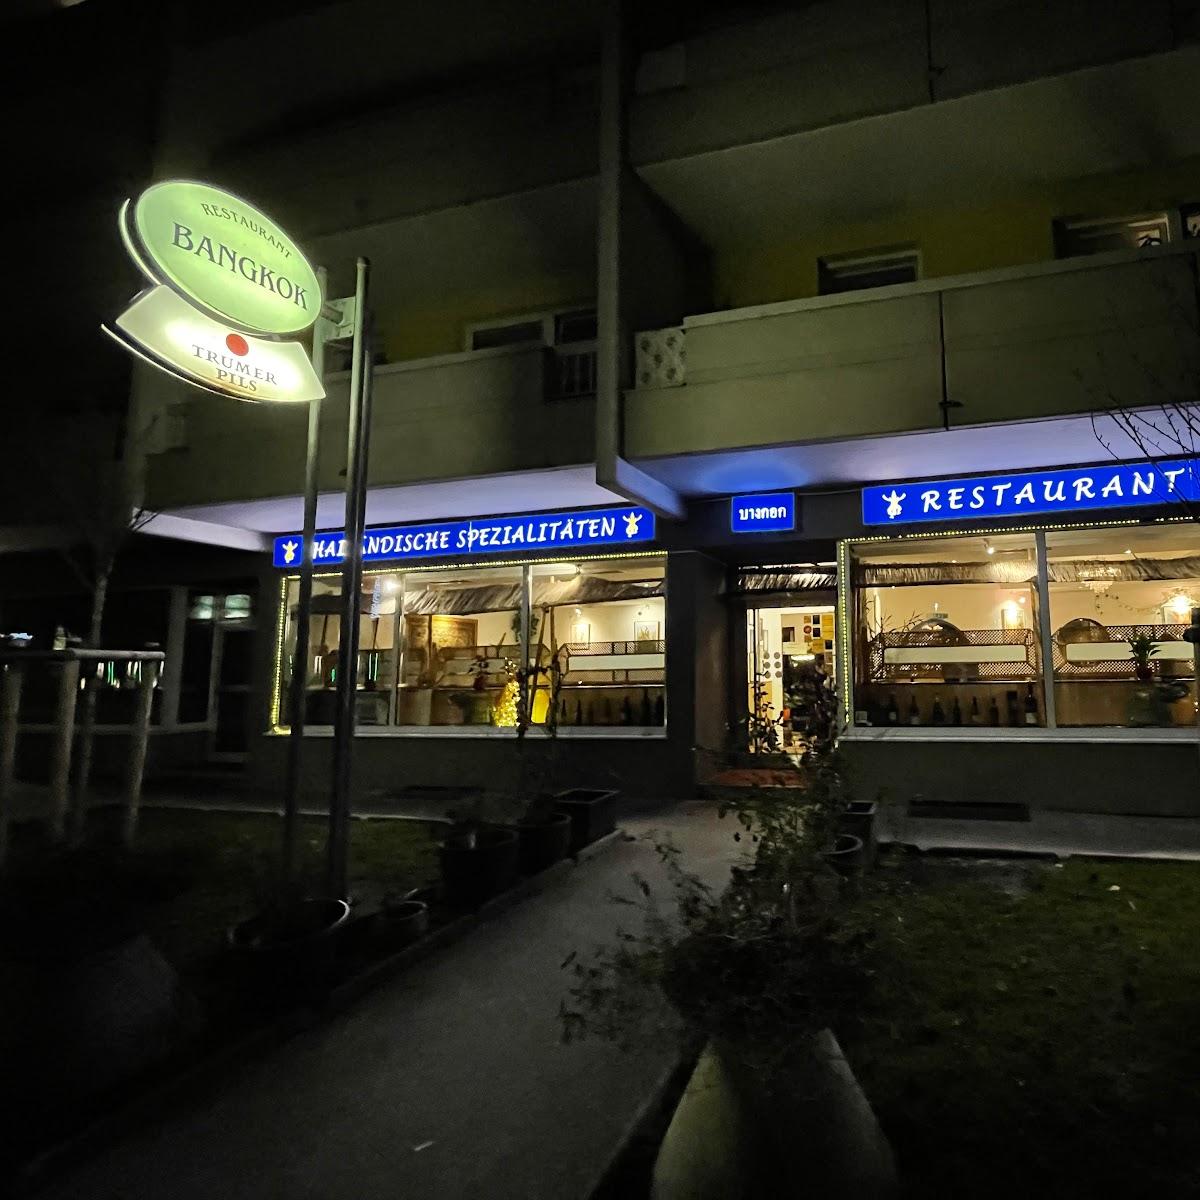 Restaurant "Restaurant Bangkok ()" in Salzburg